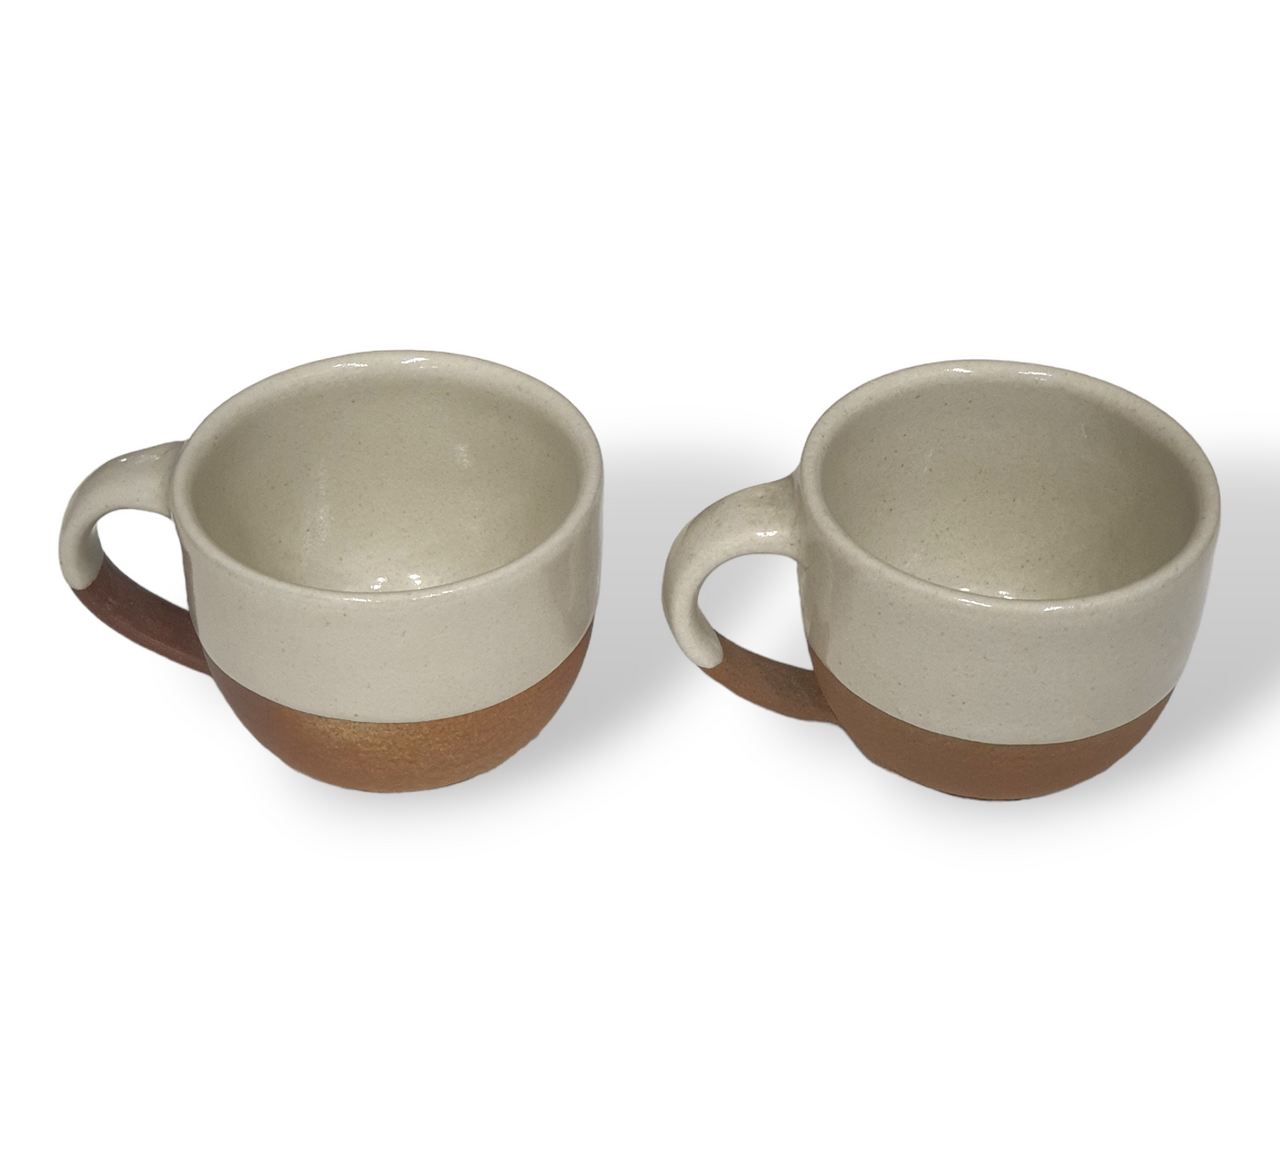 unique coffee mugs